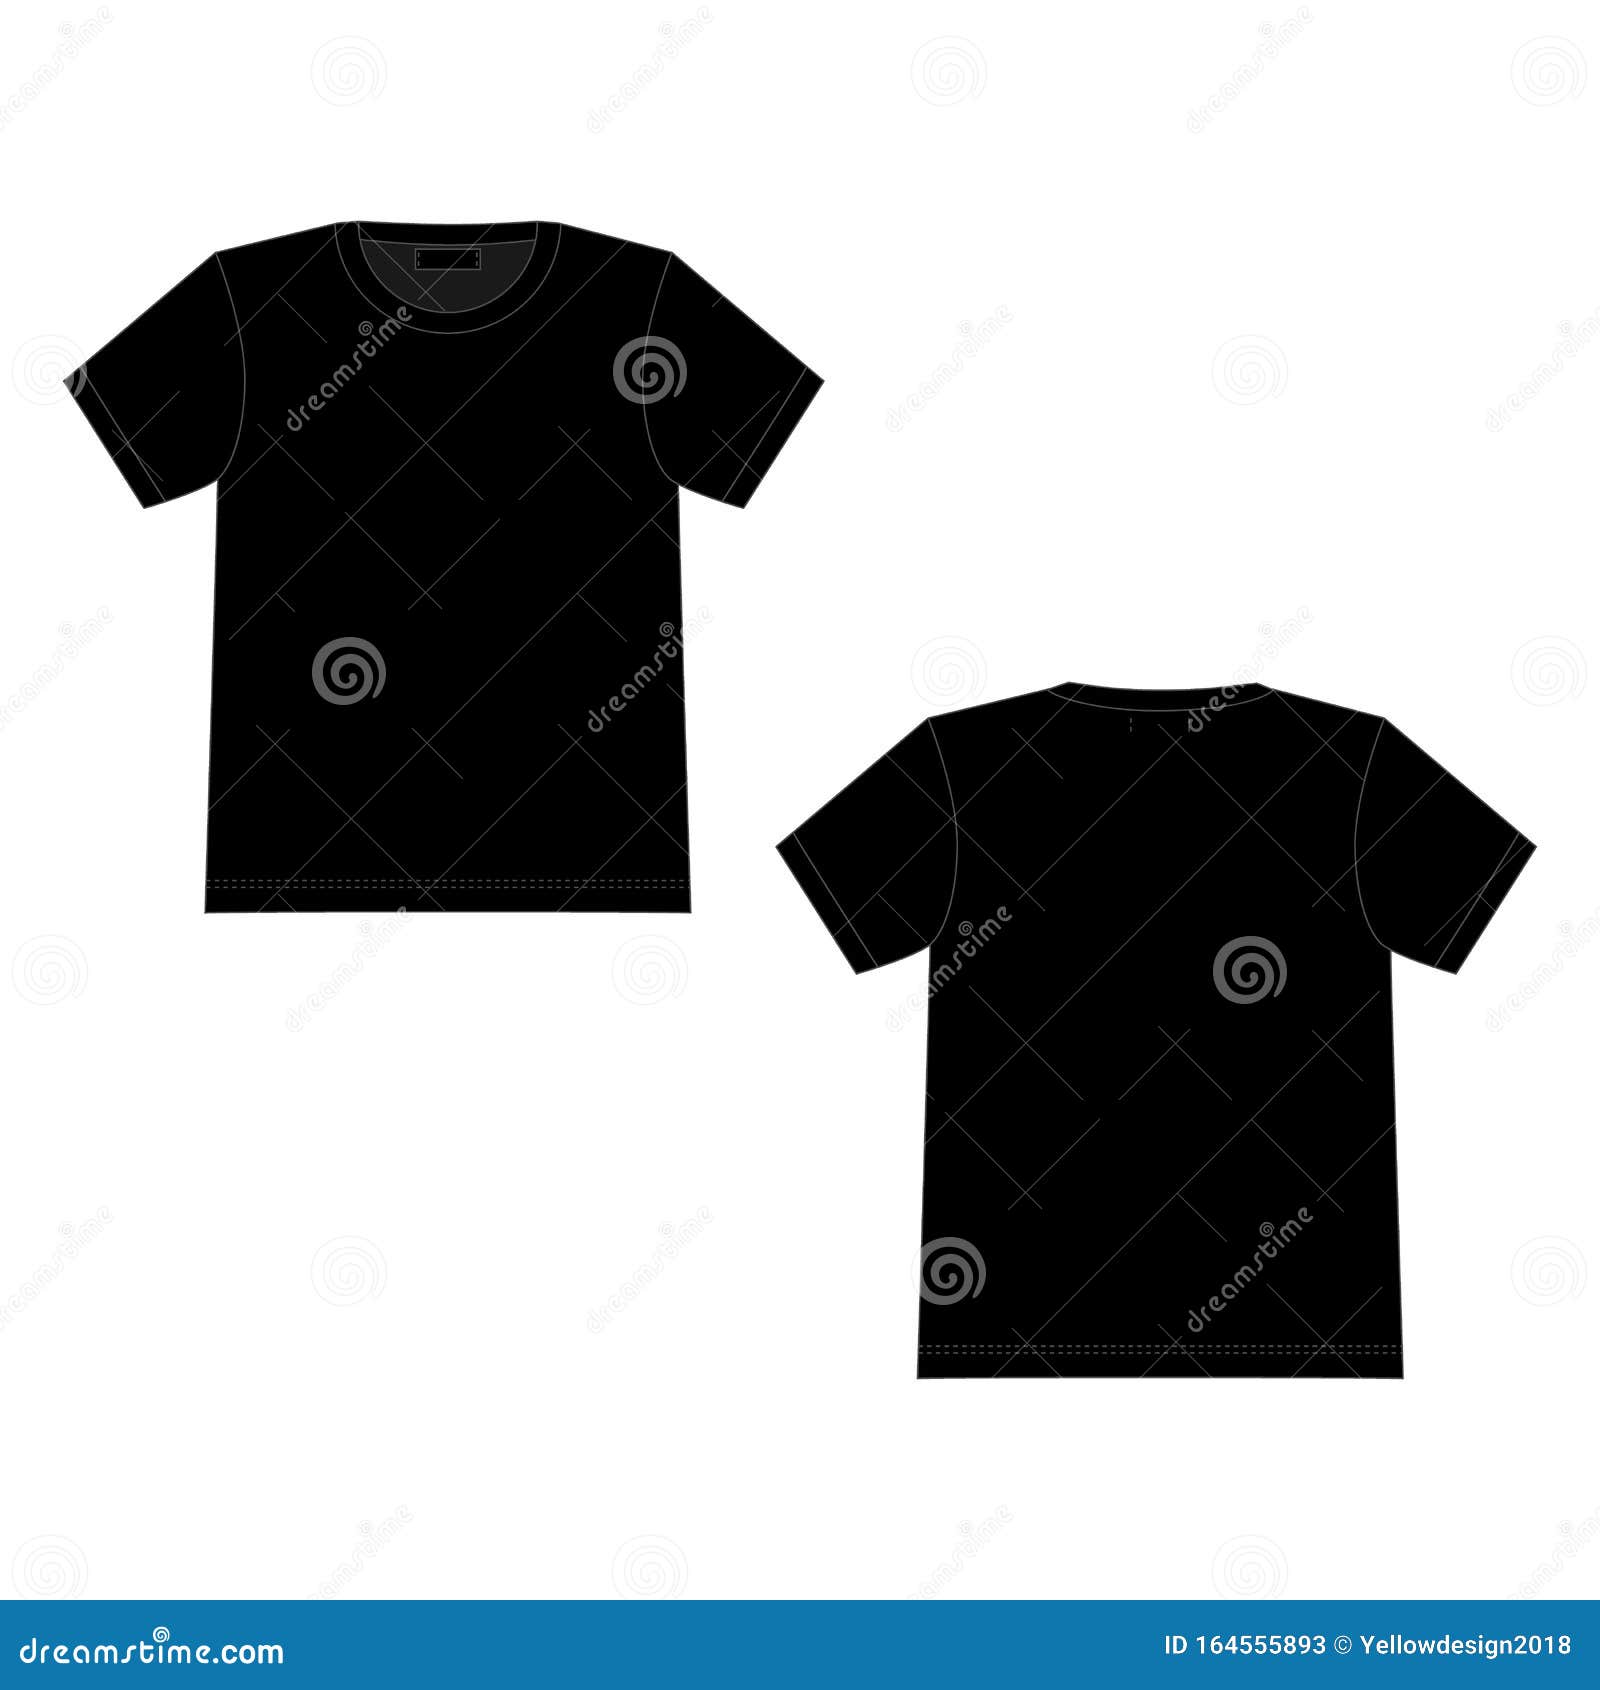 Technical Sketch T Shirt in Black Color. Unisex Underwear Top Design ...